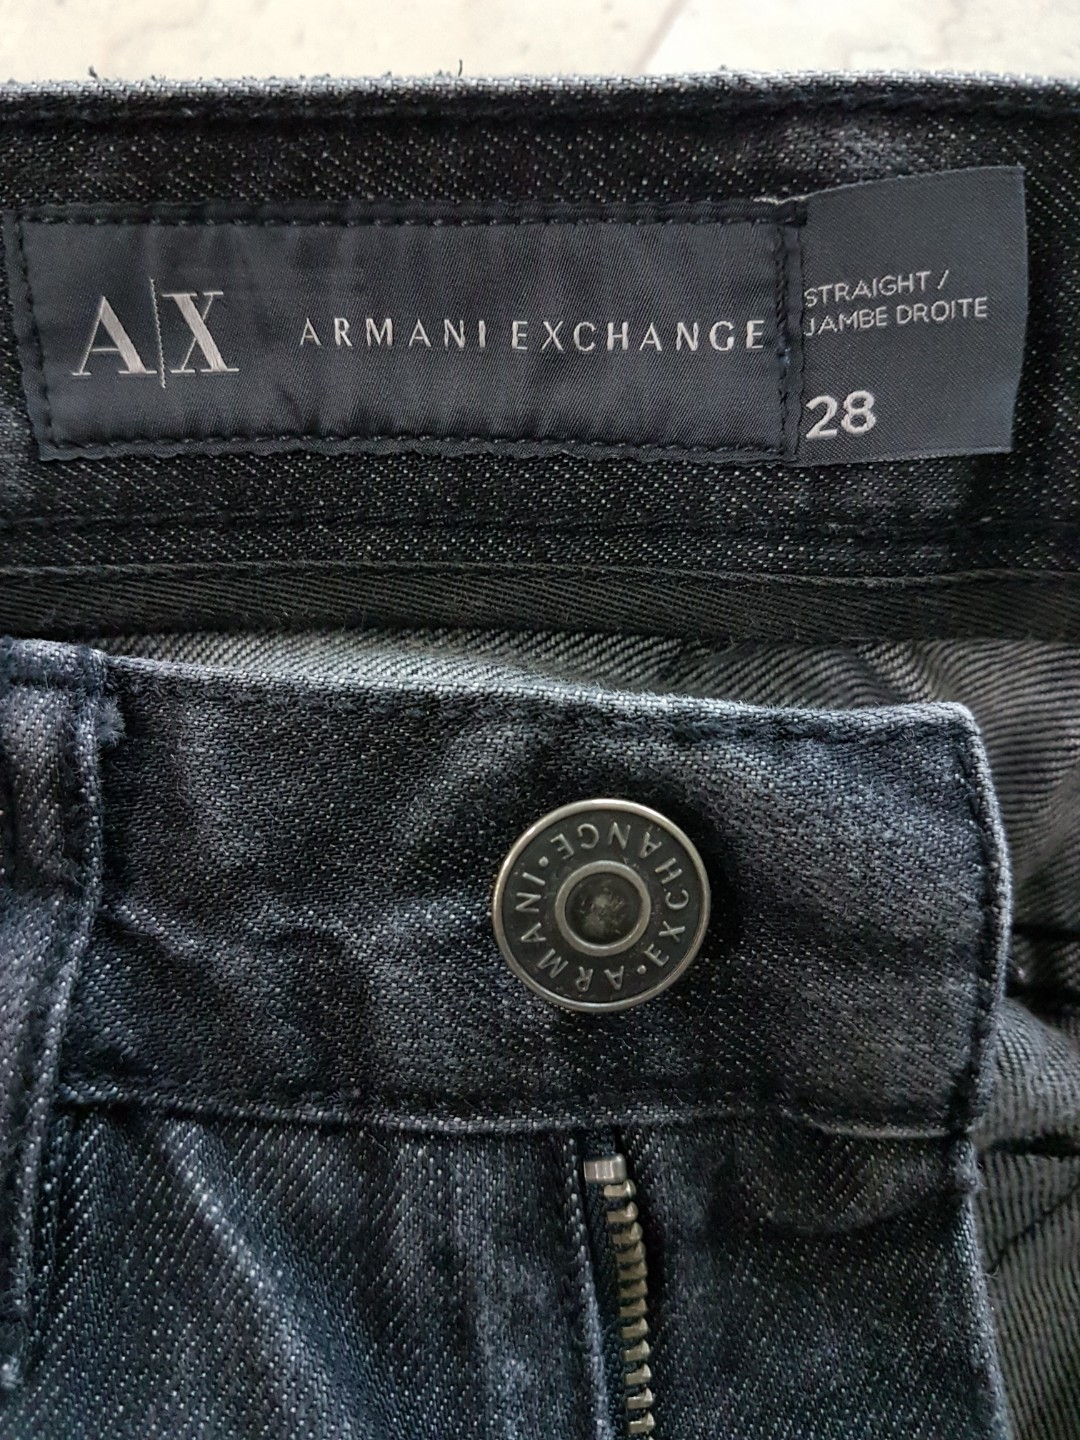 valg samlet set omfattende AX jeans for men/ladies, Men's Fashion, Bottoms, Jeans on Carousell